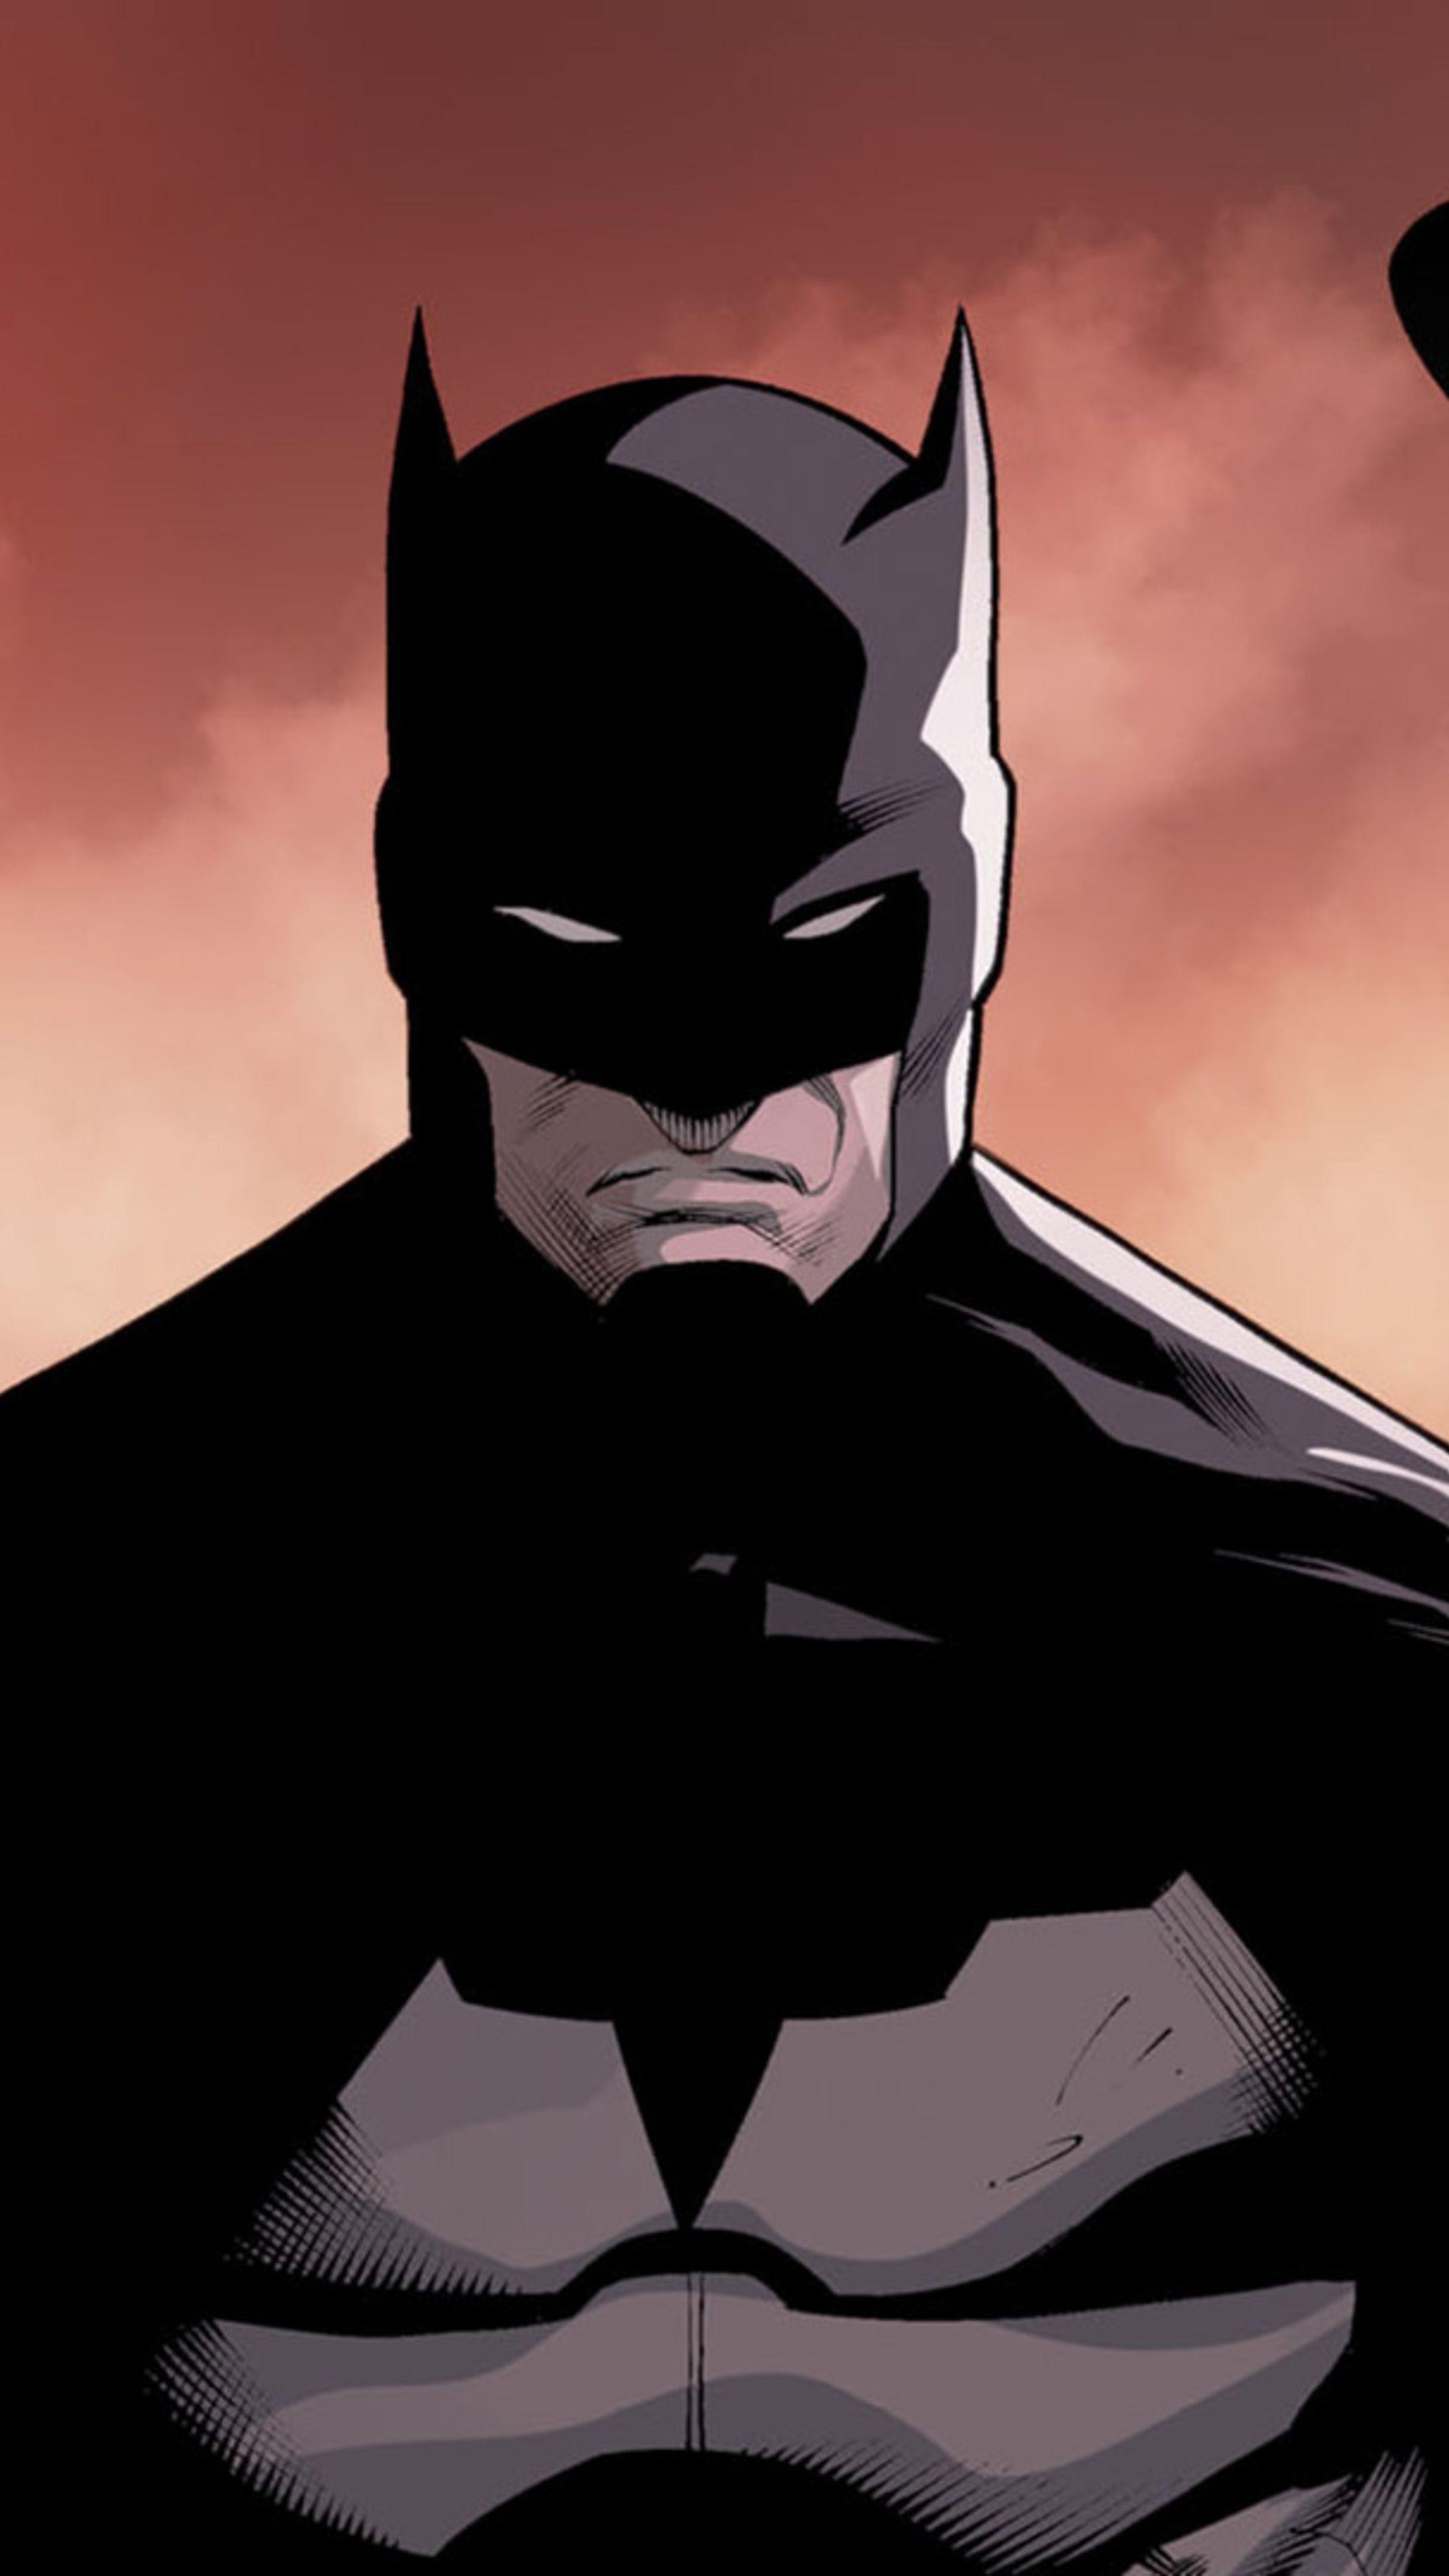 Batman Batwing DC Comics Art Sony Xperia X, XZ, Z5 Premium